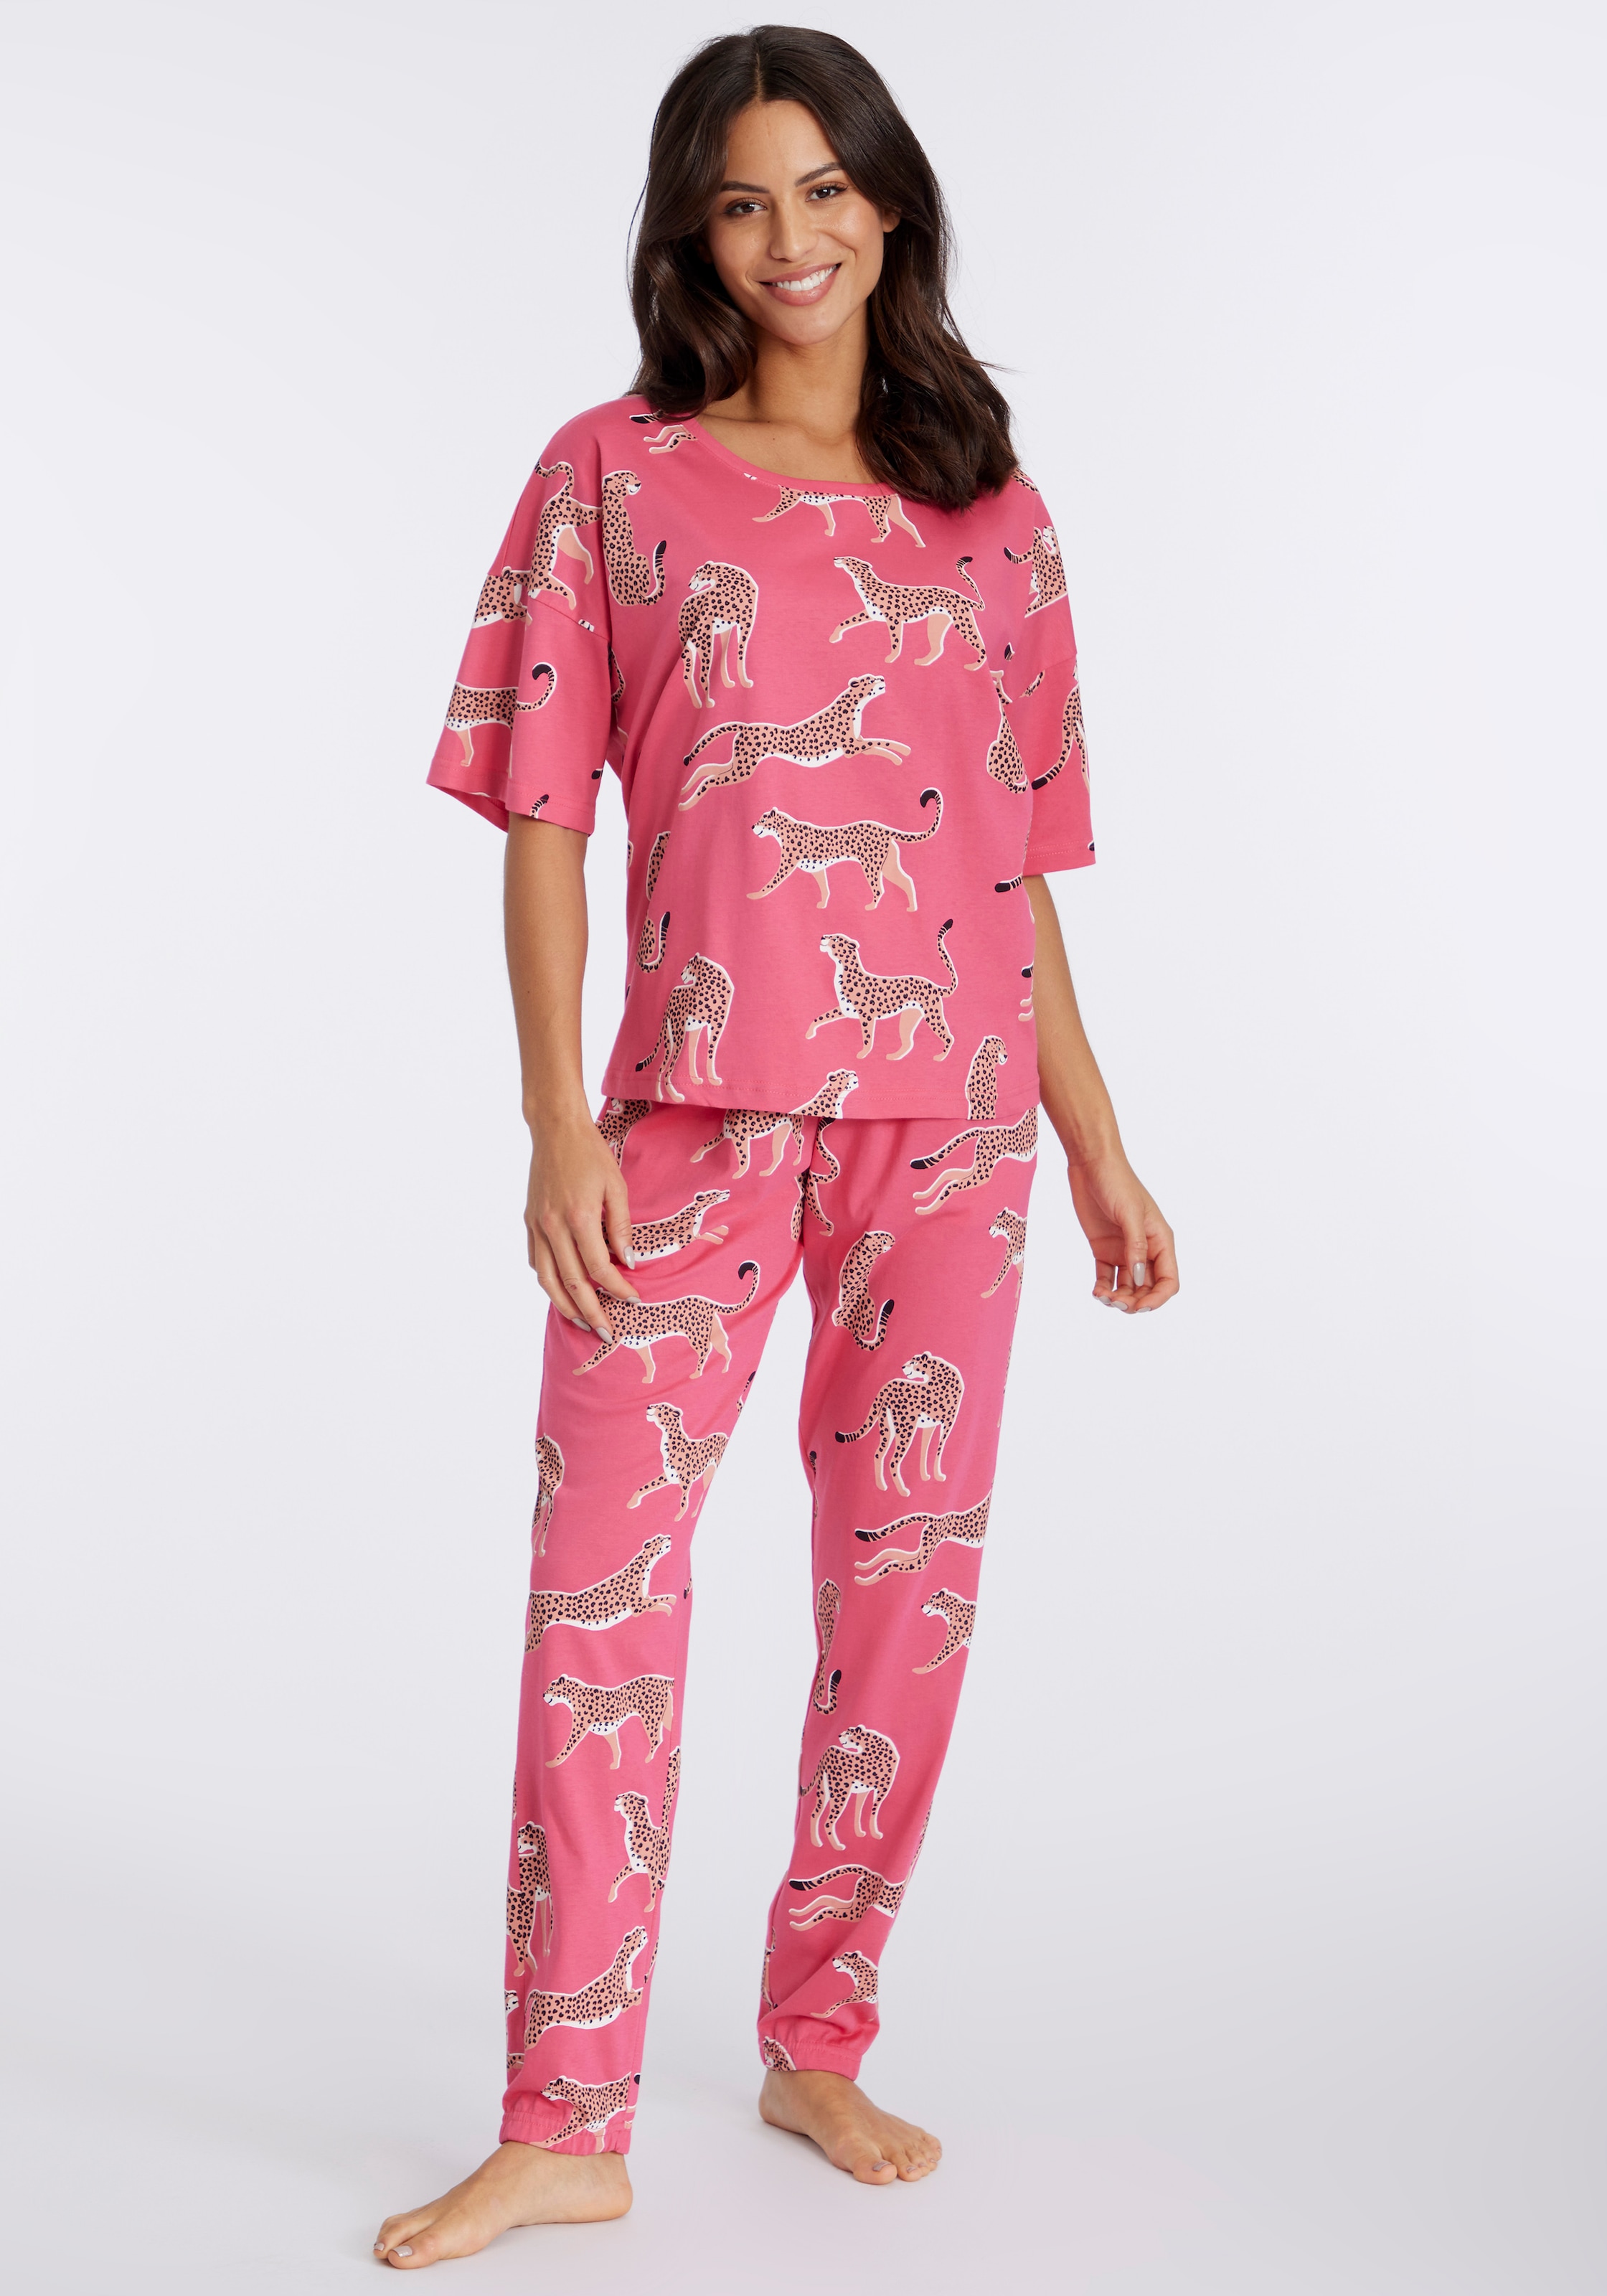 Vivance Dreams Pyjama, online tlg.), Animal mt (2 Alloverprint bestellen